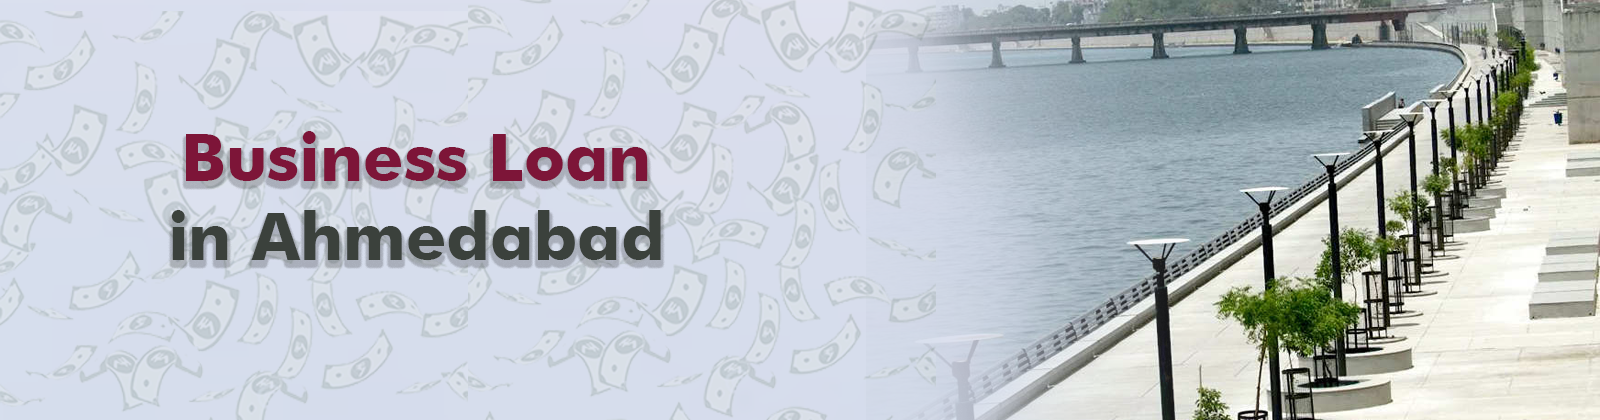 Business Loan in Ahmedabad